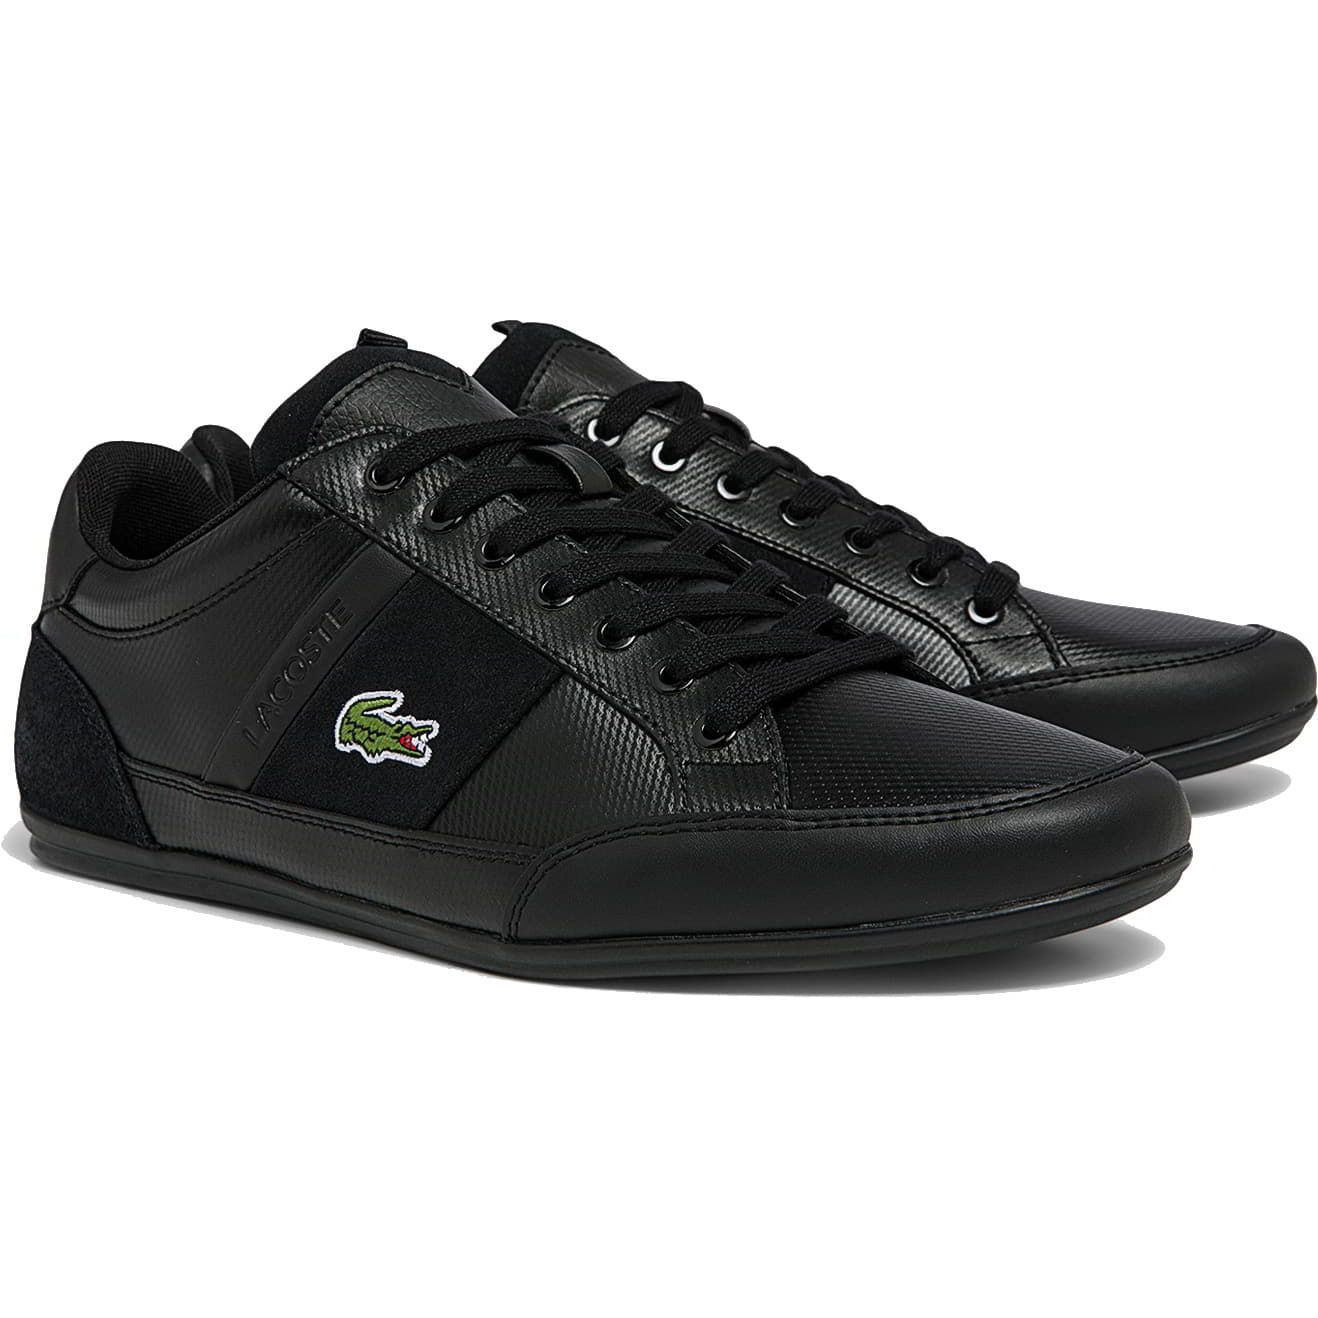 Lacoste Mens Chaymon BL 22 Leather Trainers Shoes - UK 11 Black 2951